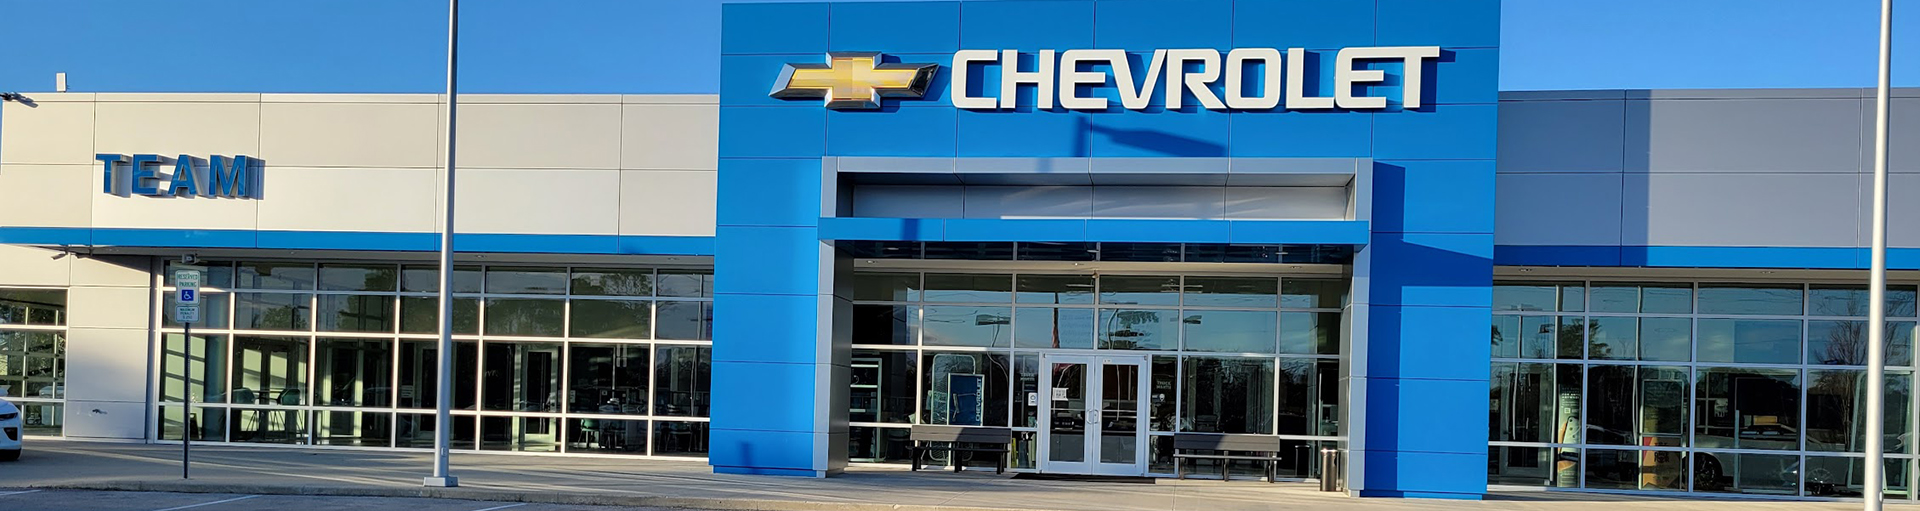 Chevrolet Technician Hiring in Swansboro, NC